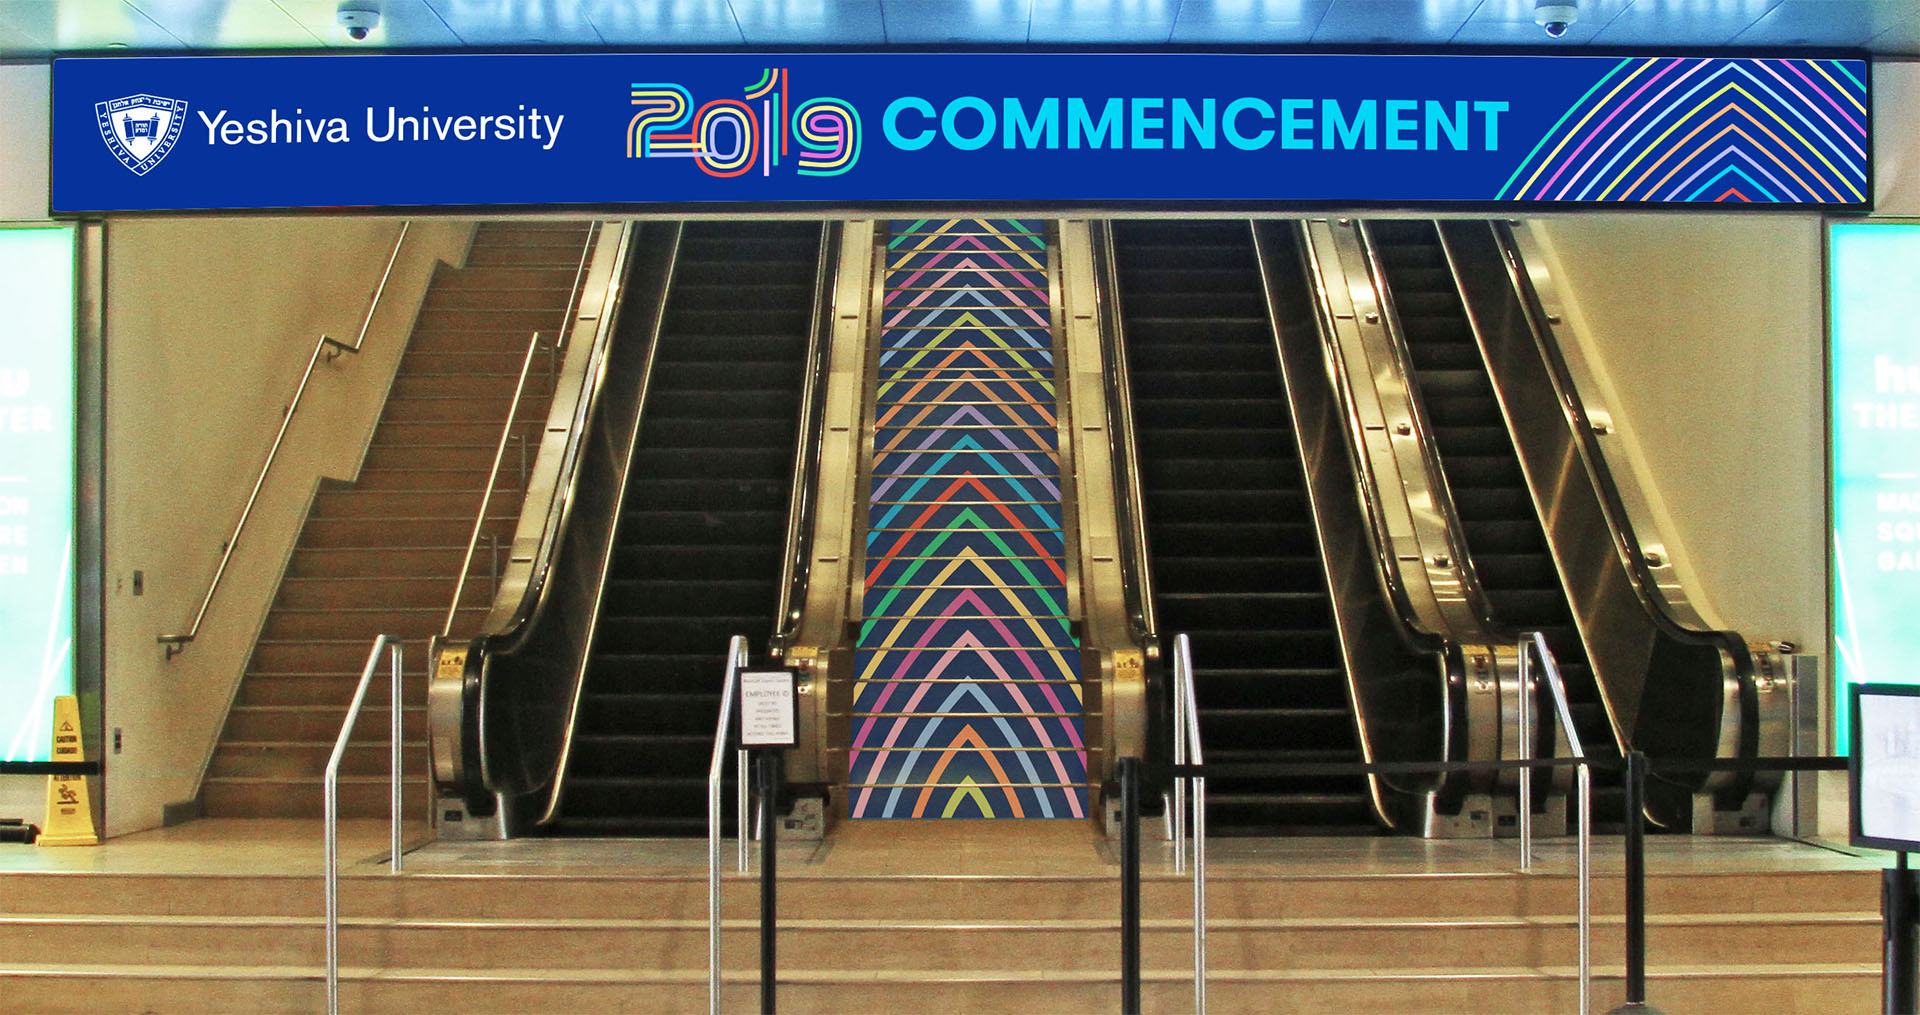 Yeshiva University - Commencement - Stairs Signs